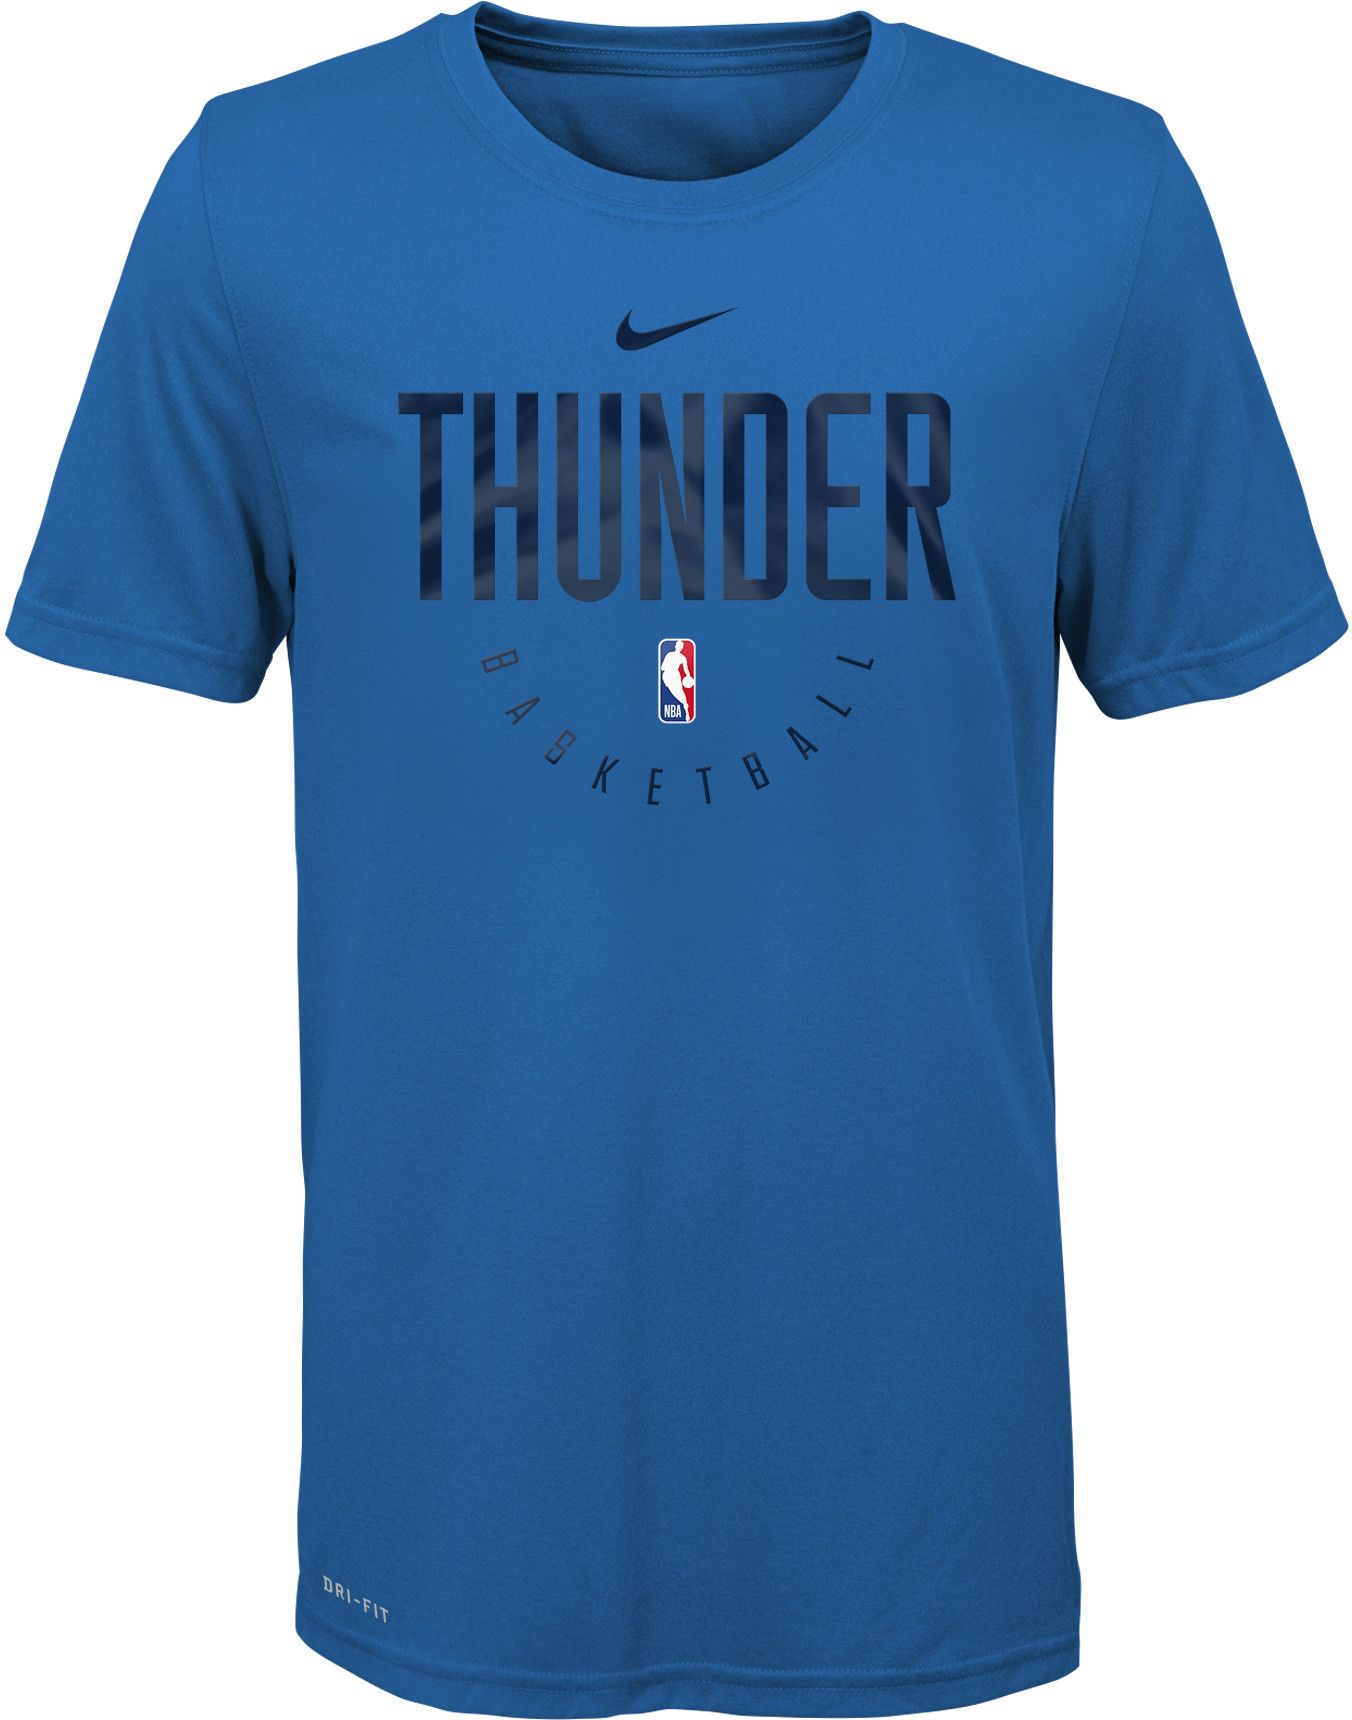 Oklahoma City Thunder Kids' Apparel | NBA Fan Shop at DICK'S